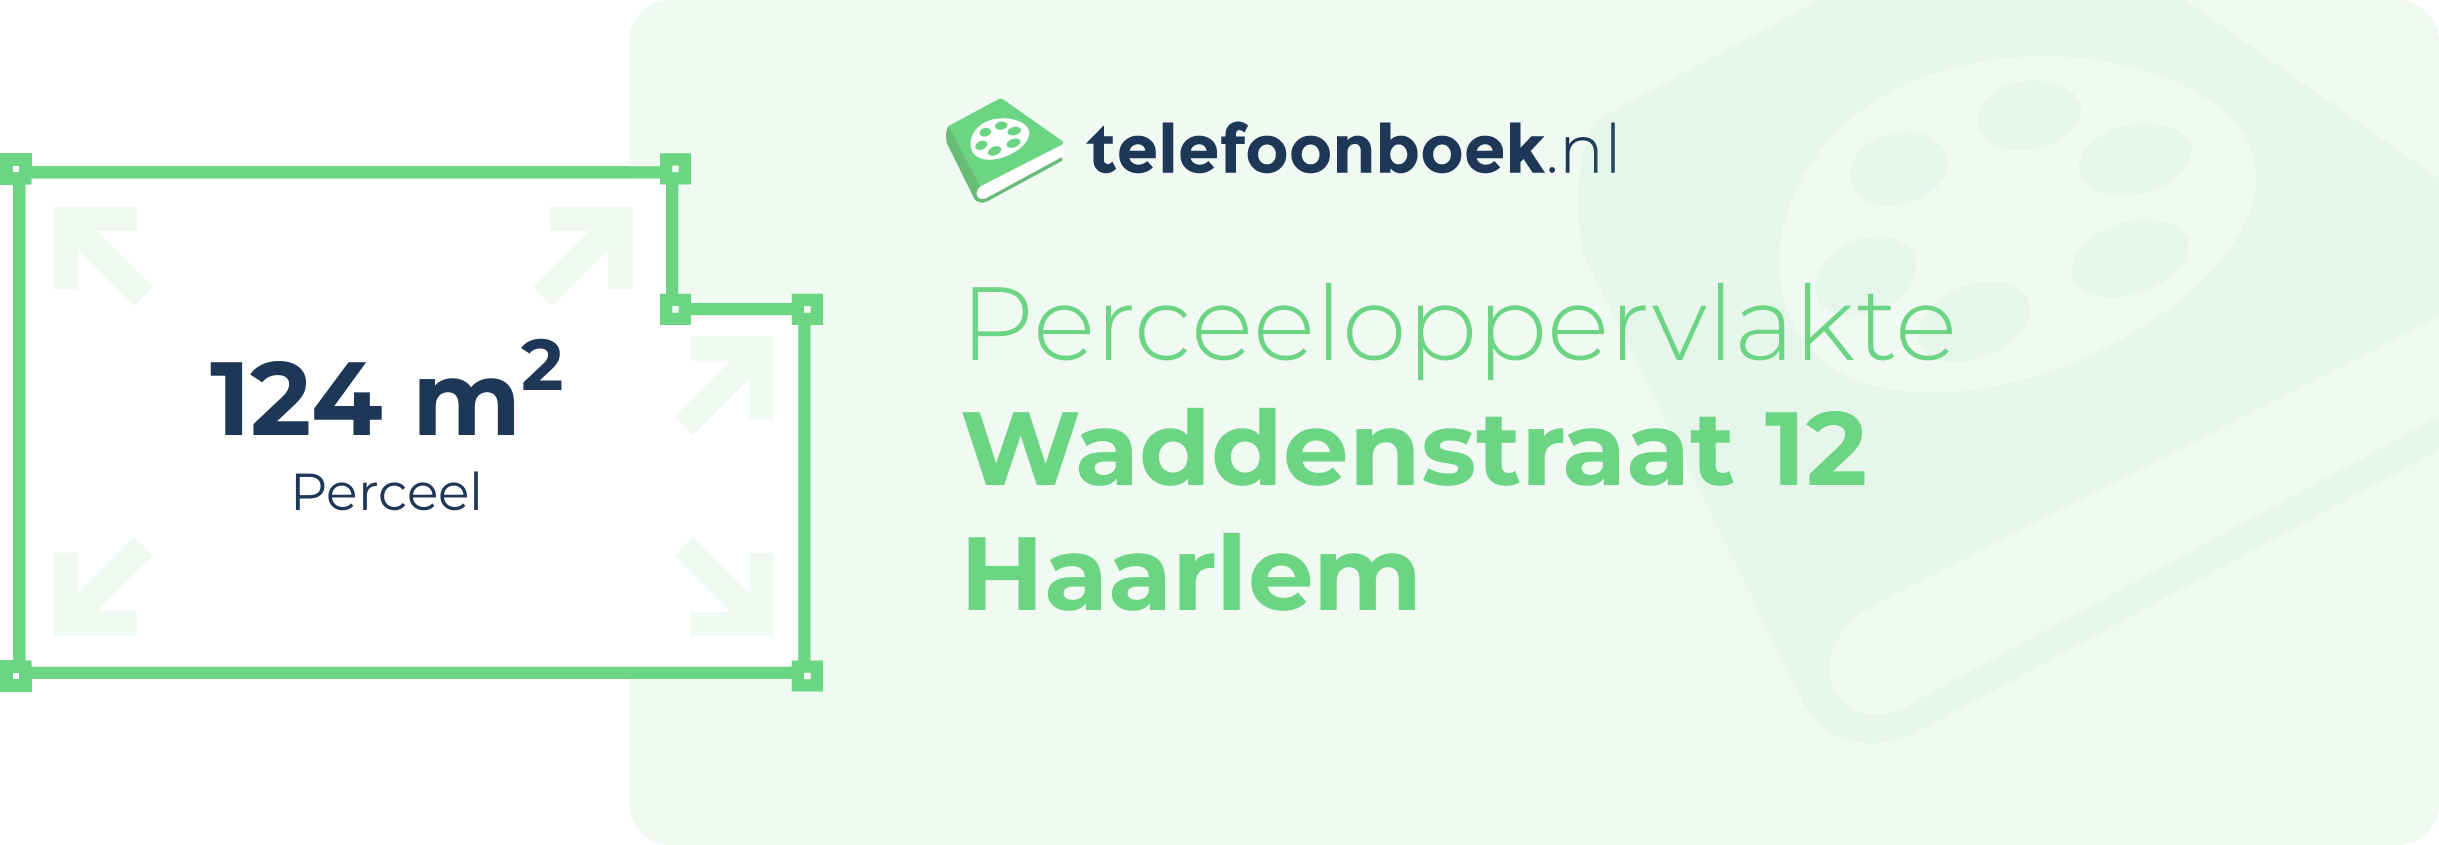 Perceeloppervlakte Waddenstraat 12 Haarlem